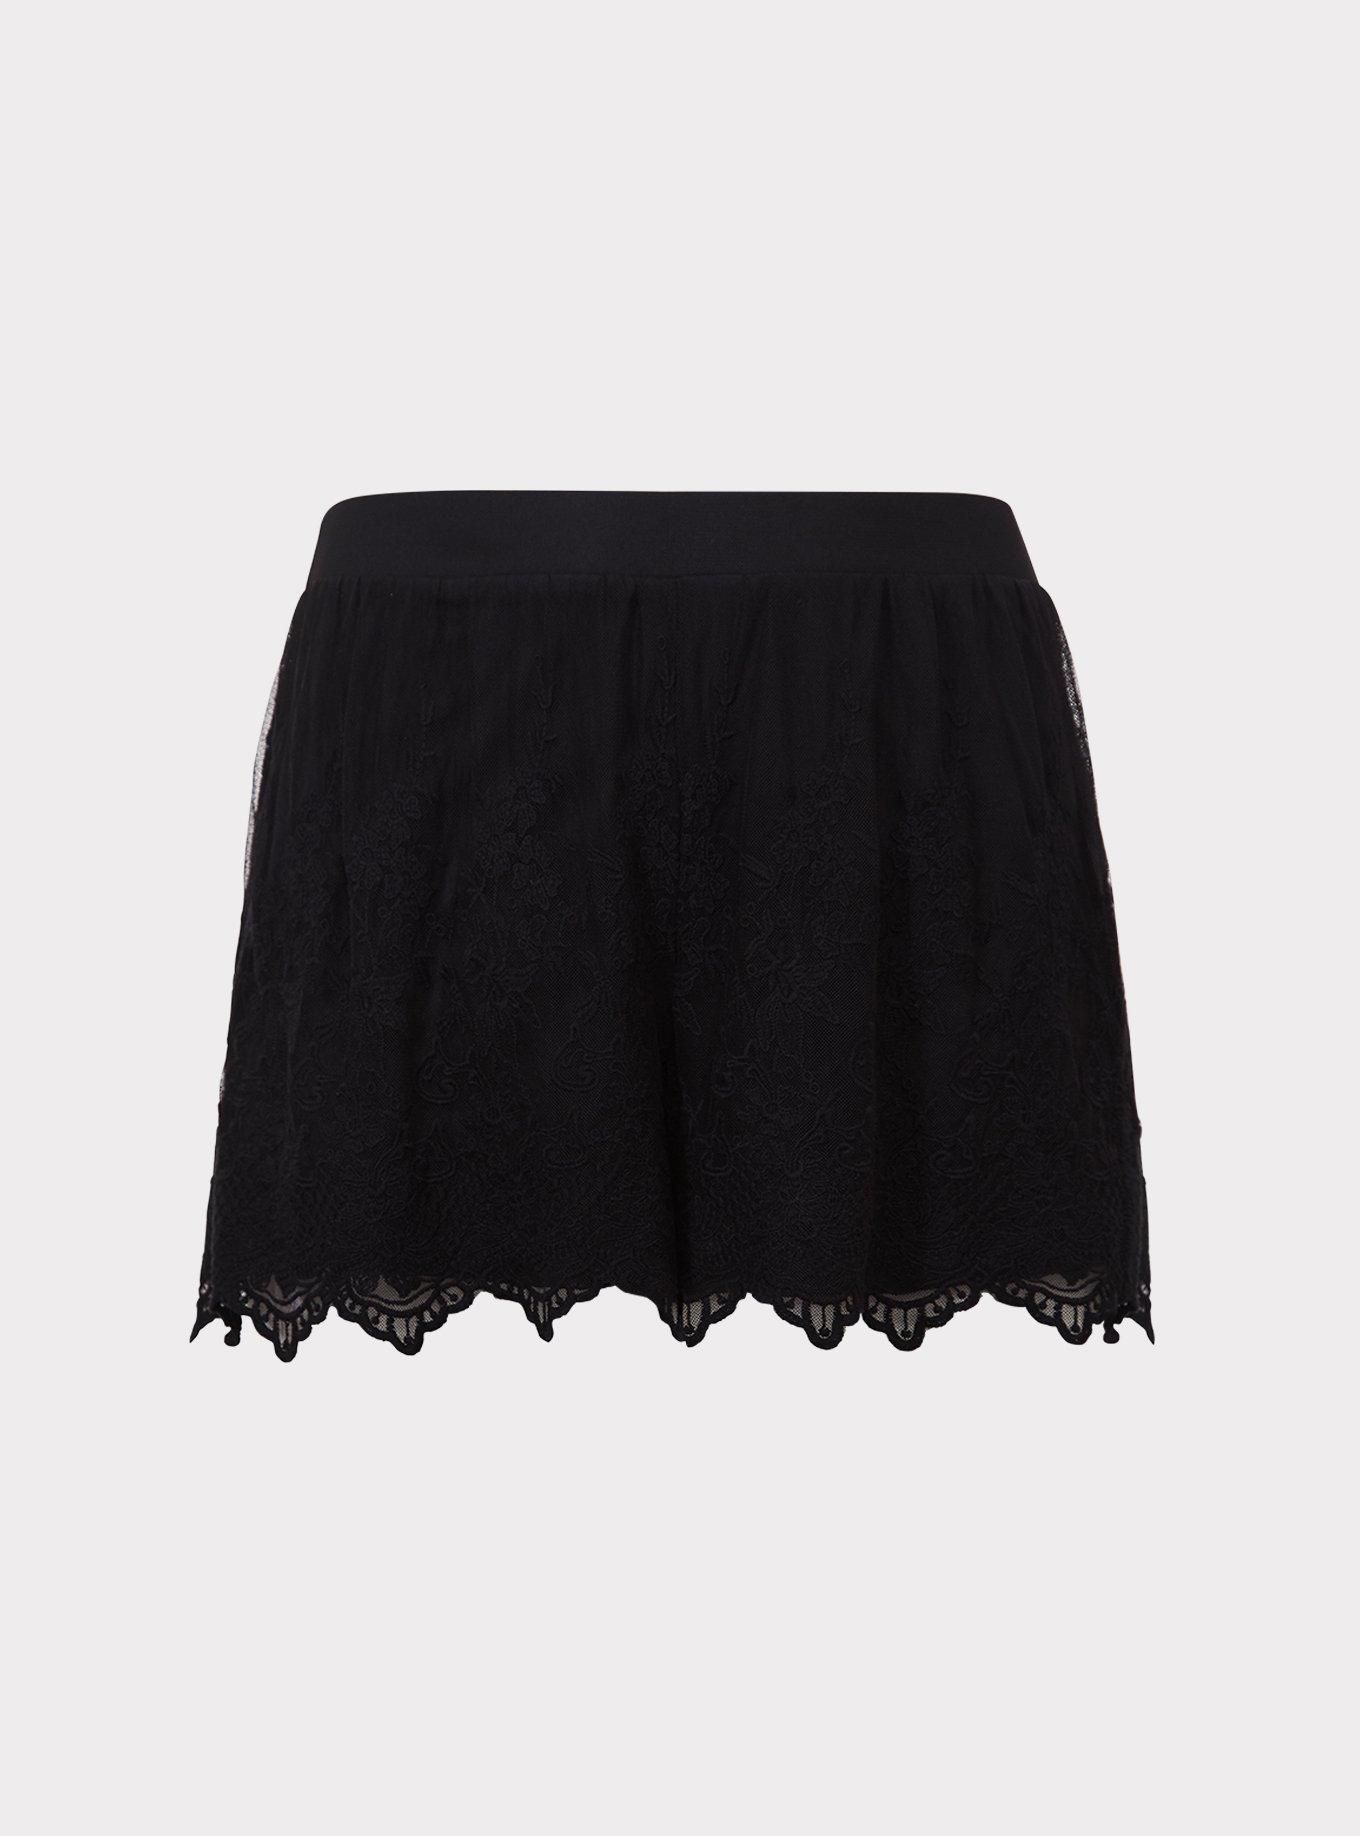 Plus Size - Black Embroidered Mesh Short - Torrid